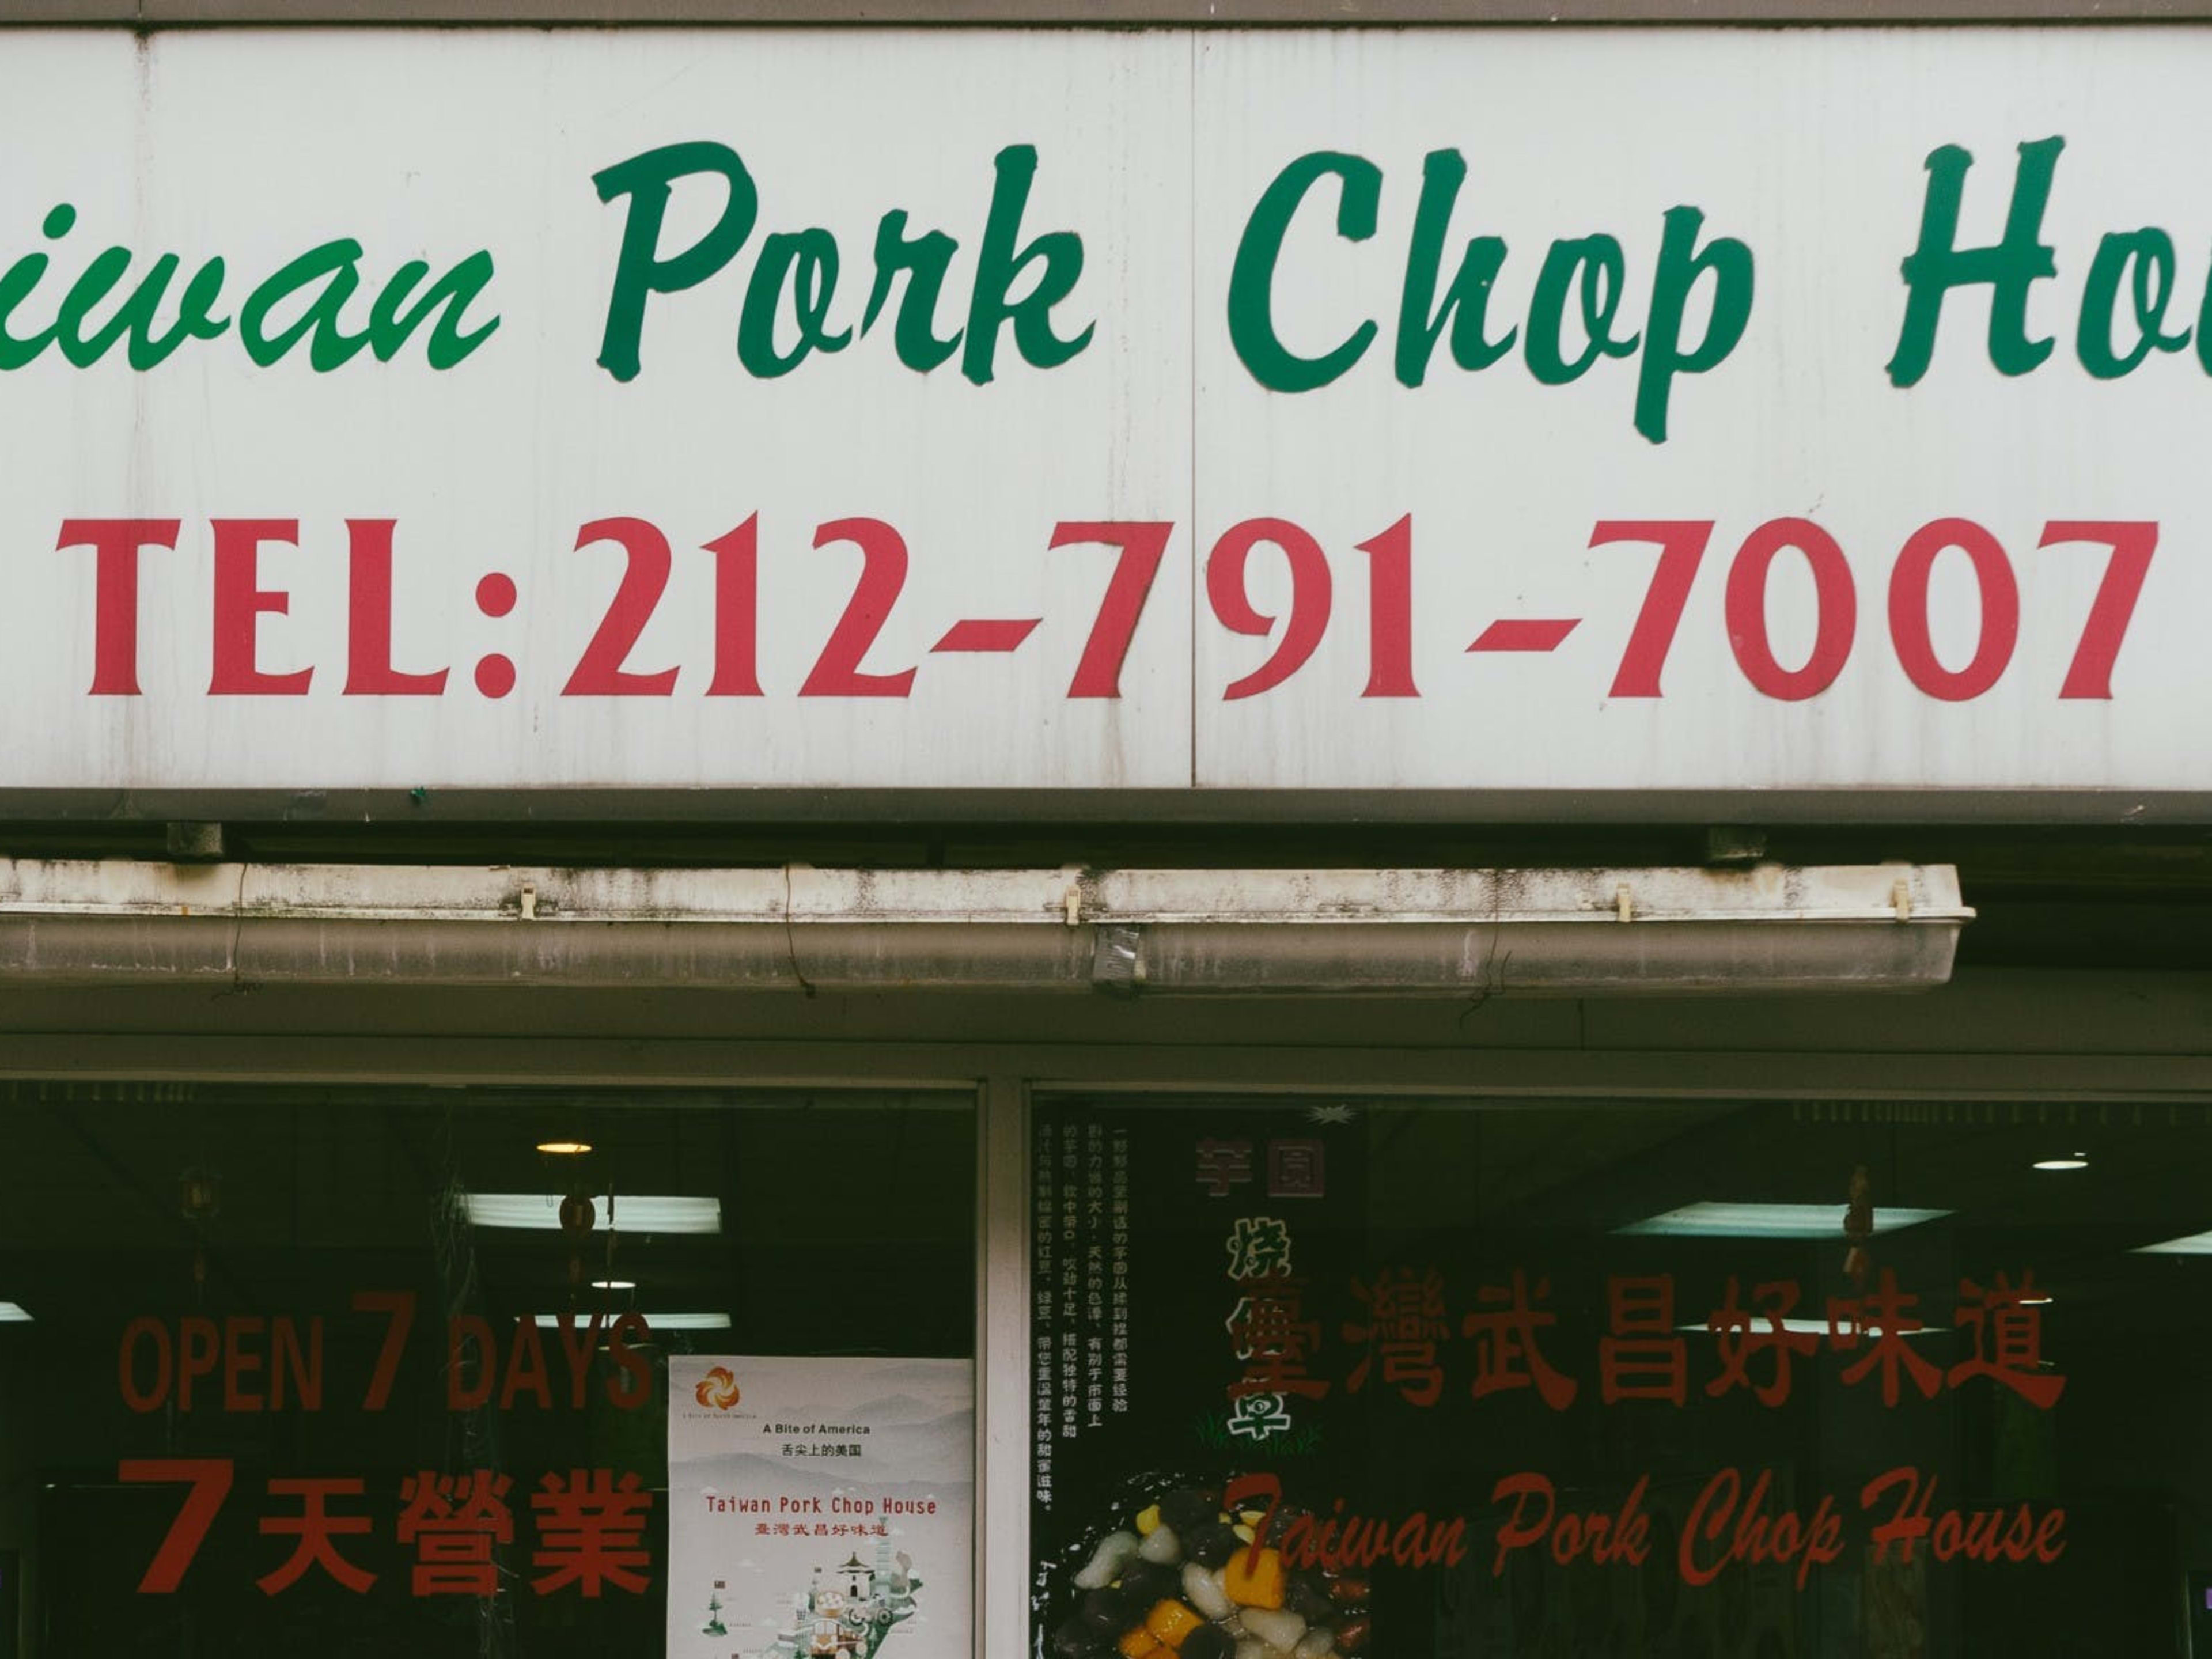 Taiwan Pork Chop House review image